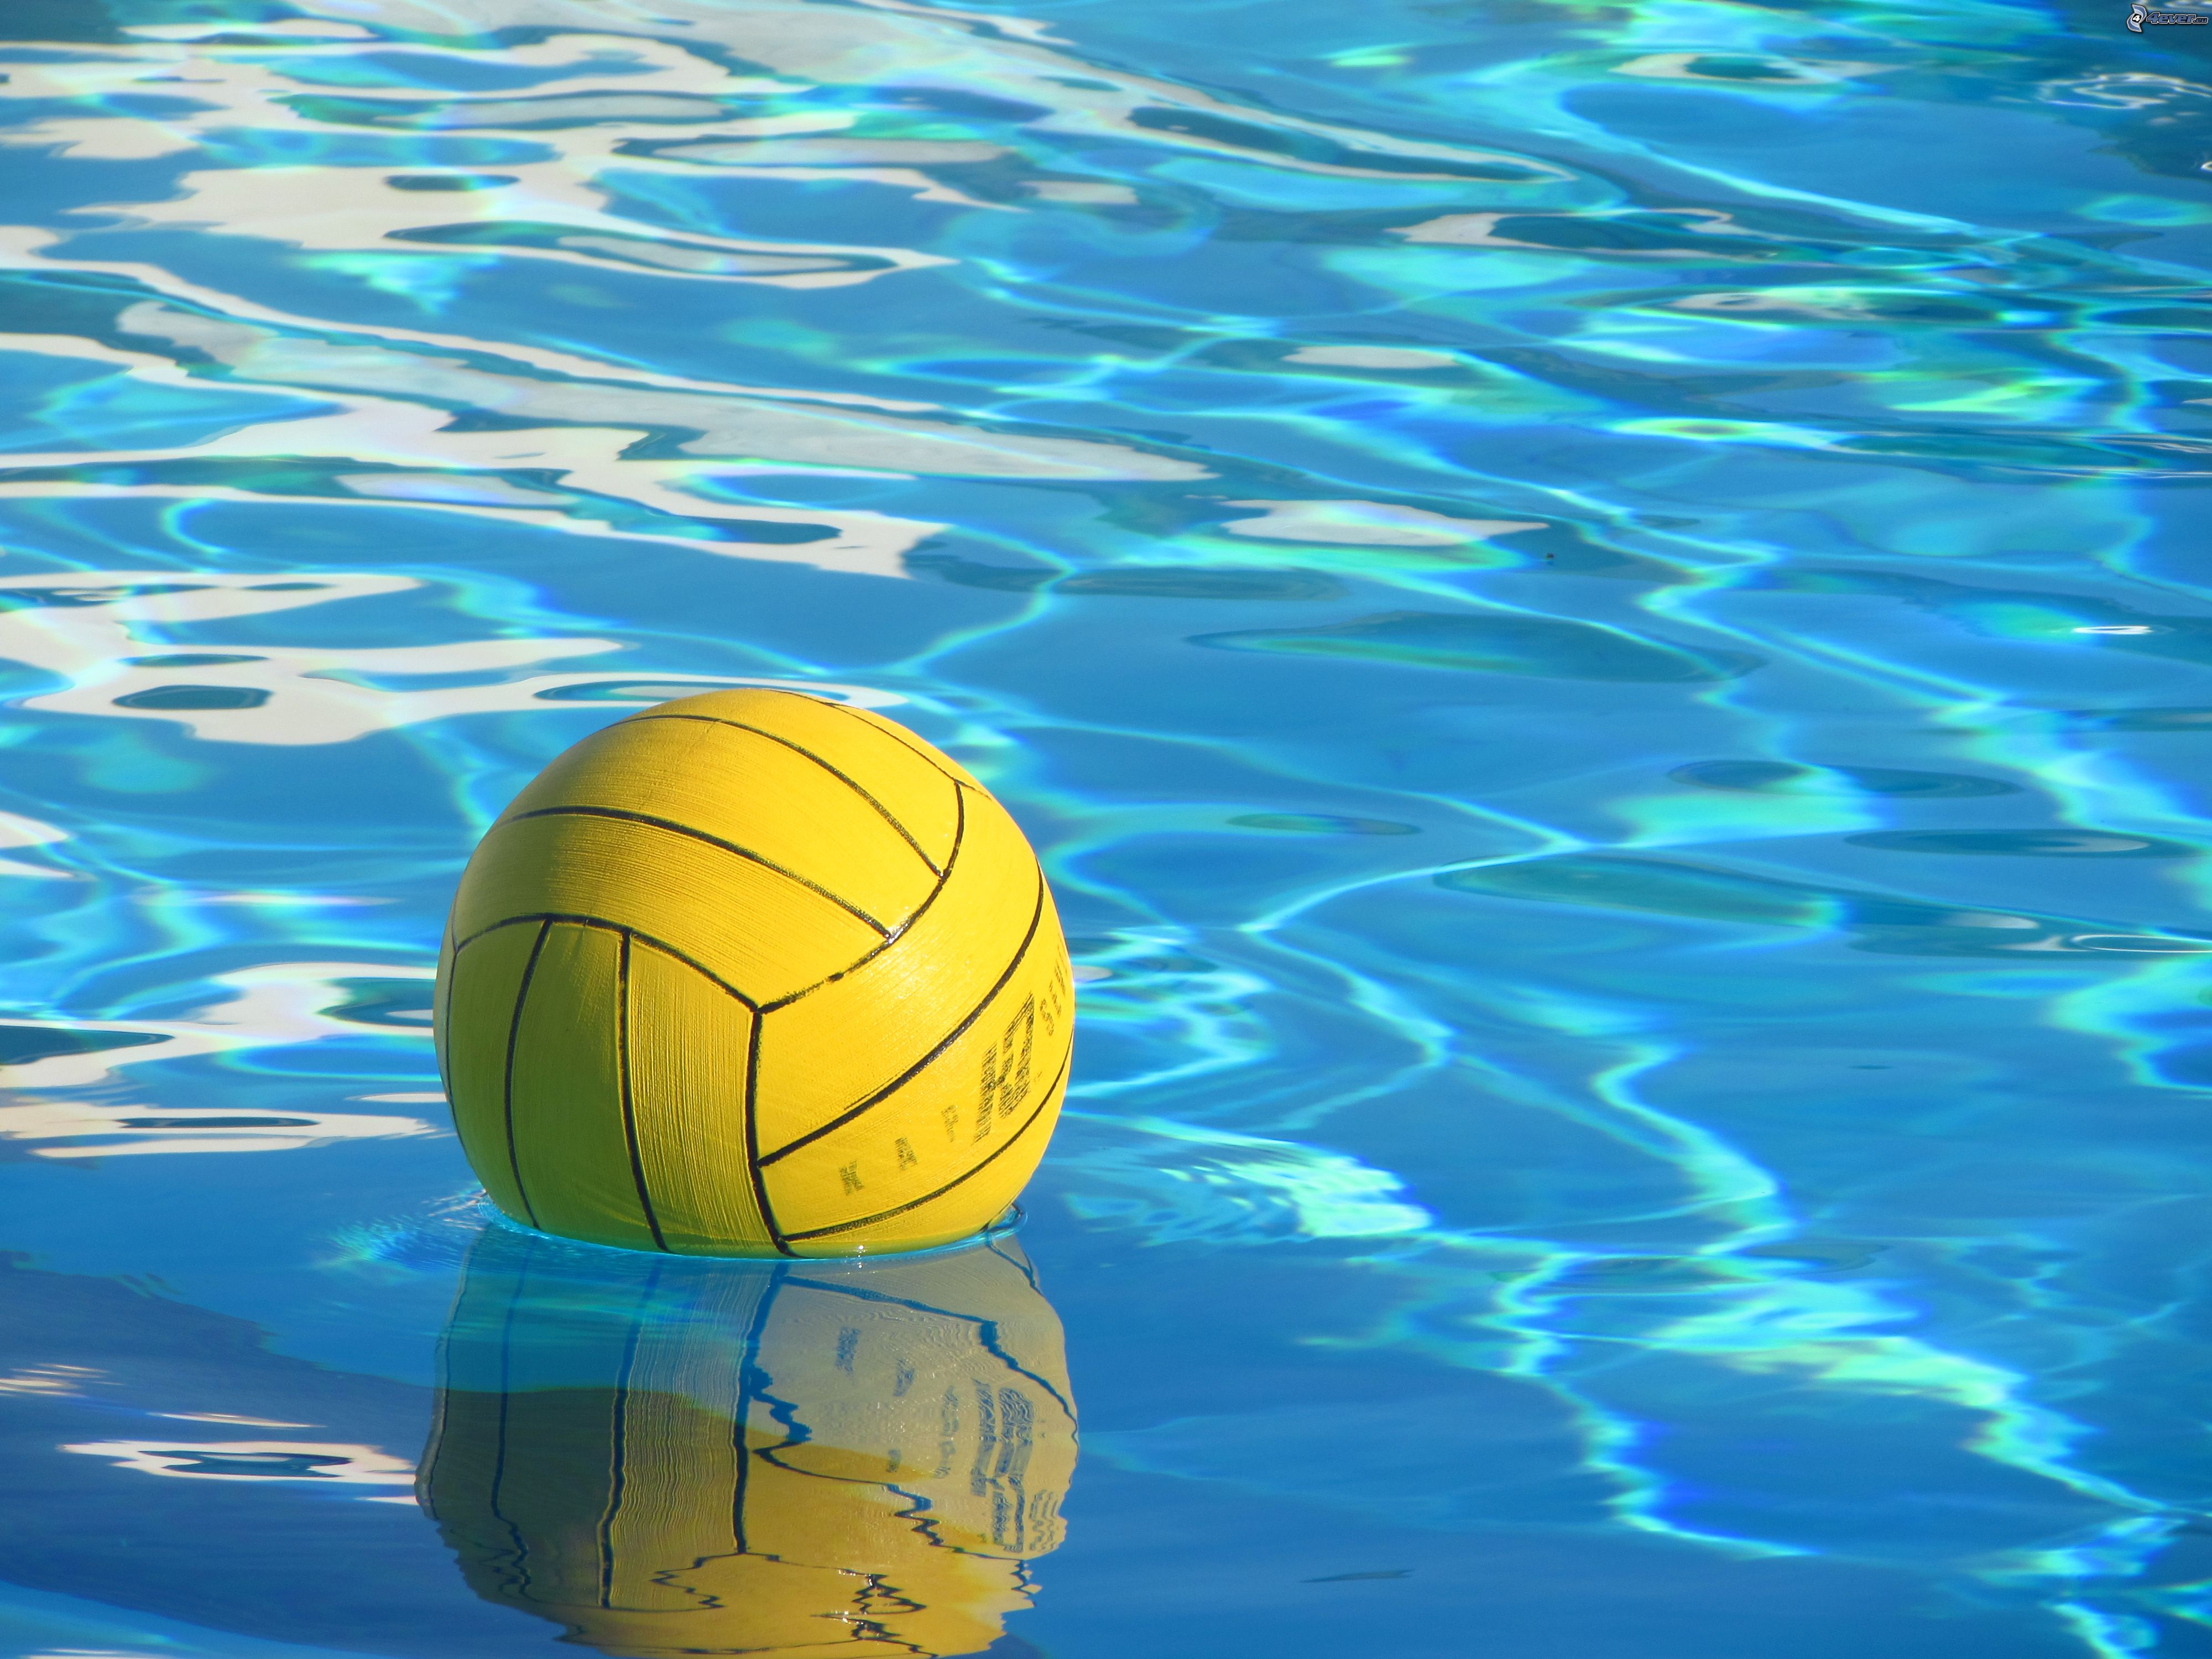 Wasser Polo Ball - Kostenloses Foto auf Pixabay - Pixabay